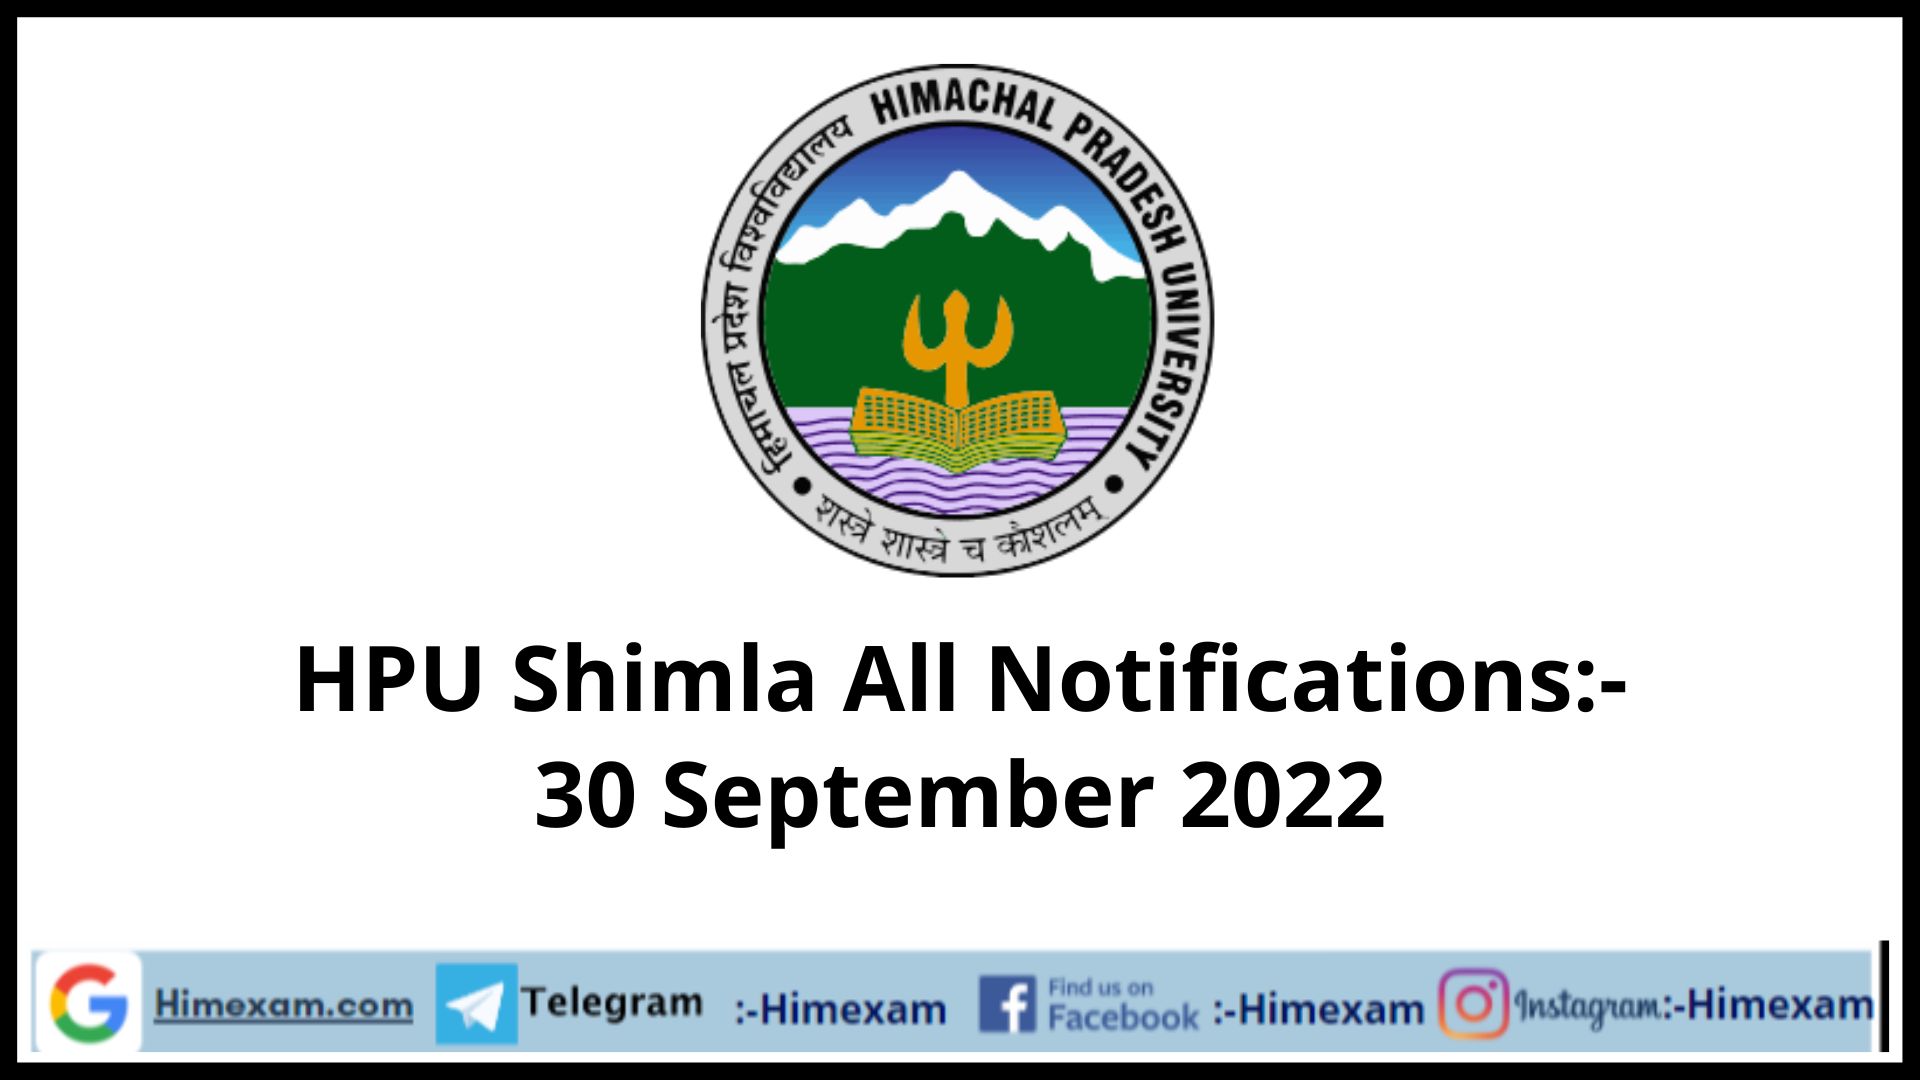 HPU Shimla All Notifications:- 30 September 2022